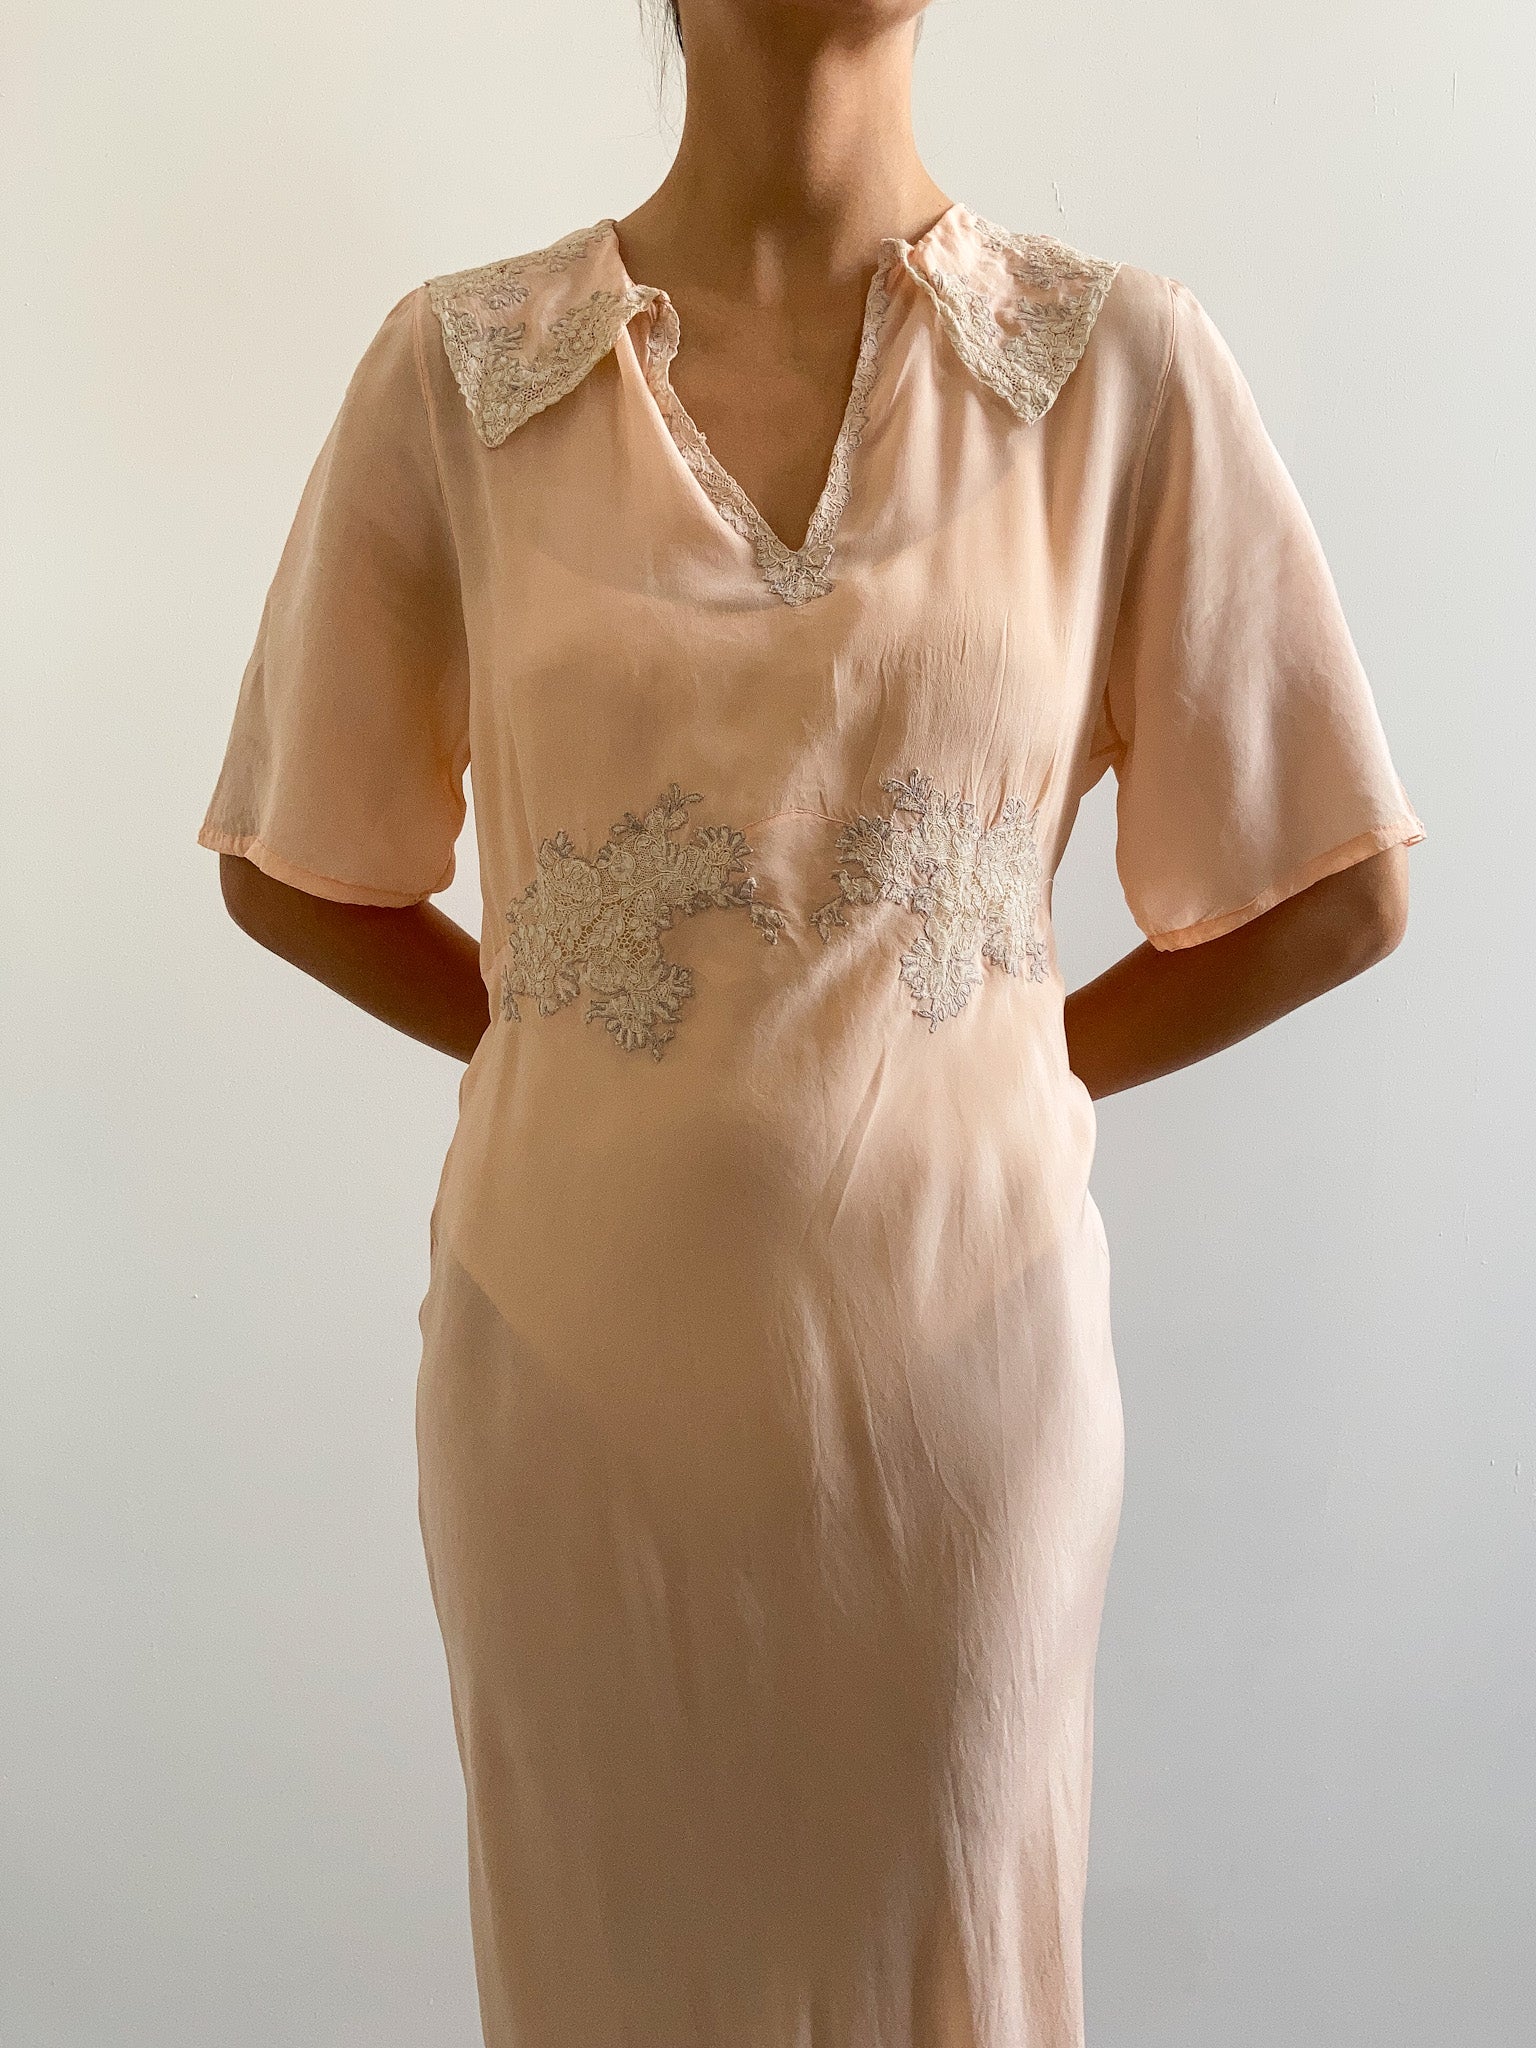 1930s Peach Chiffon Gown with Alencon Lace